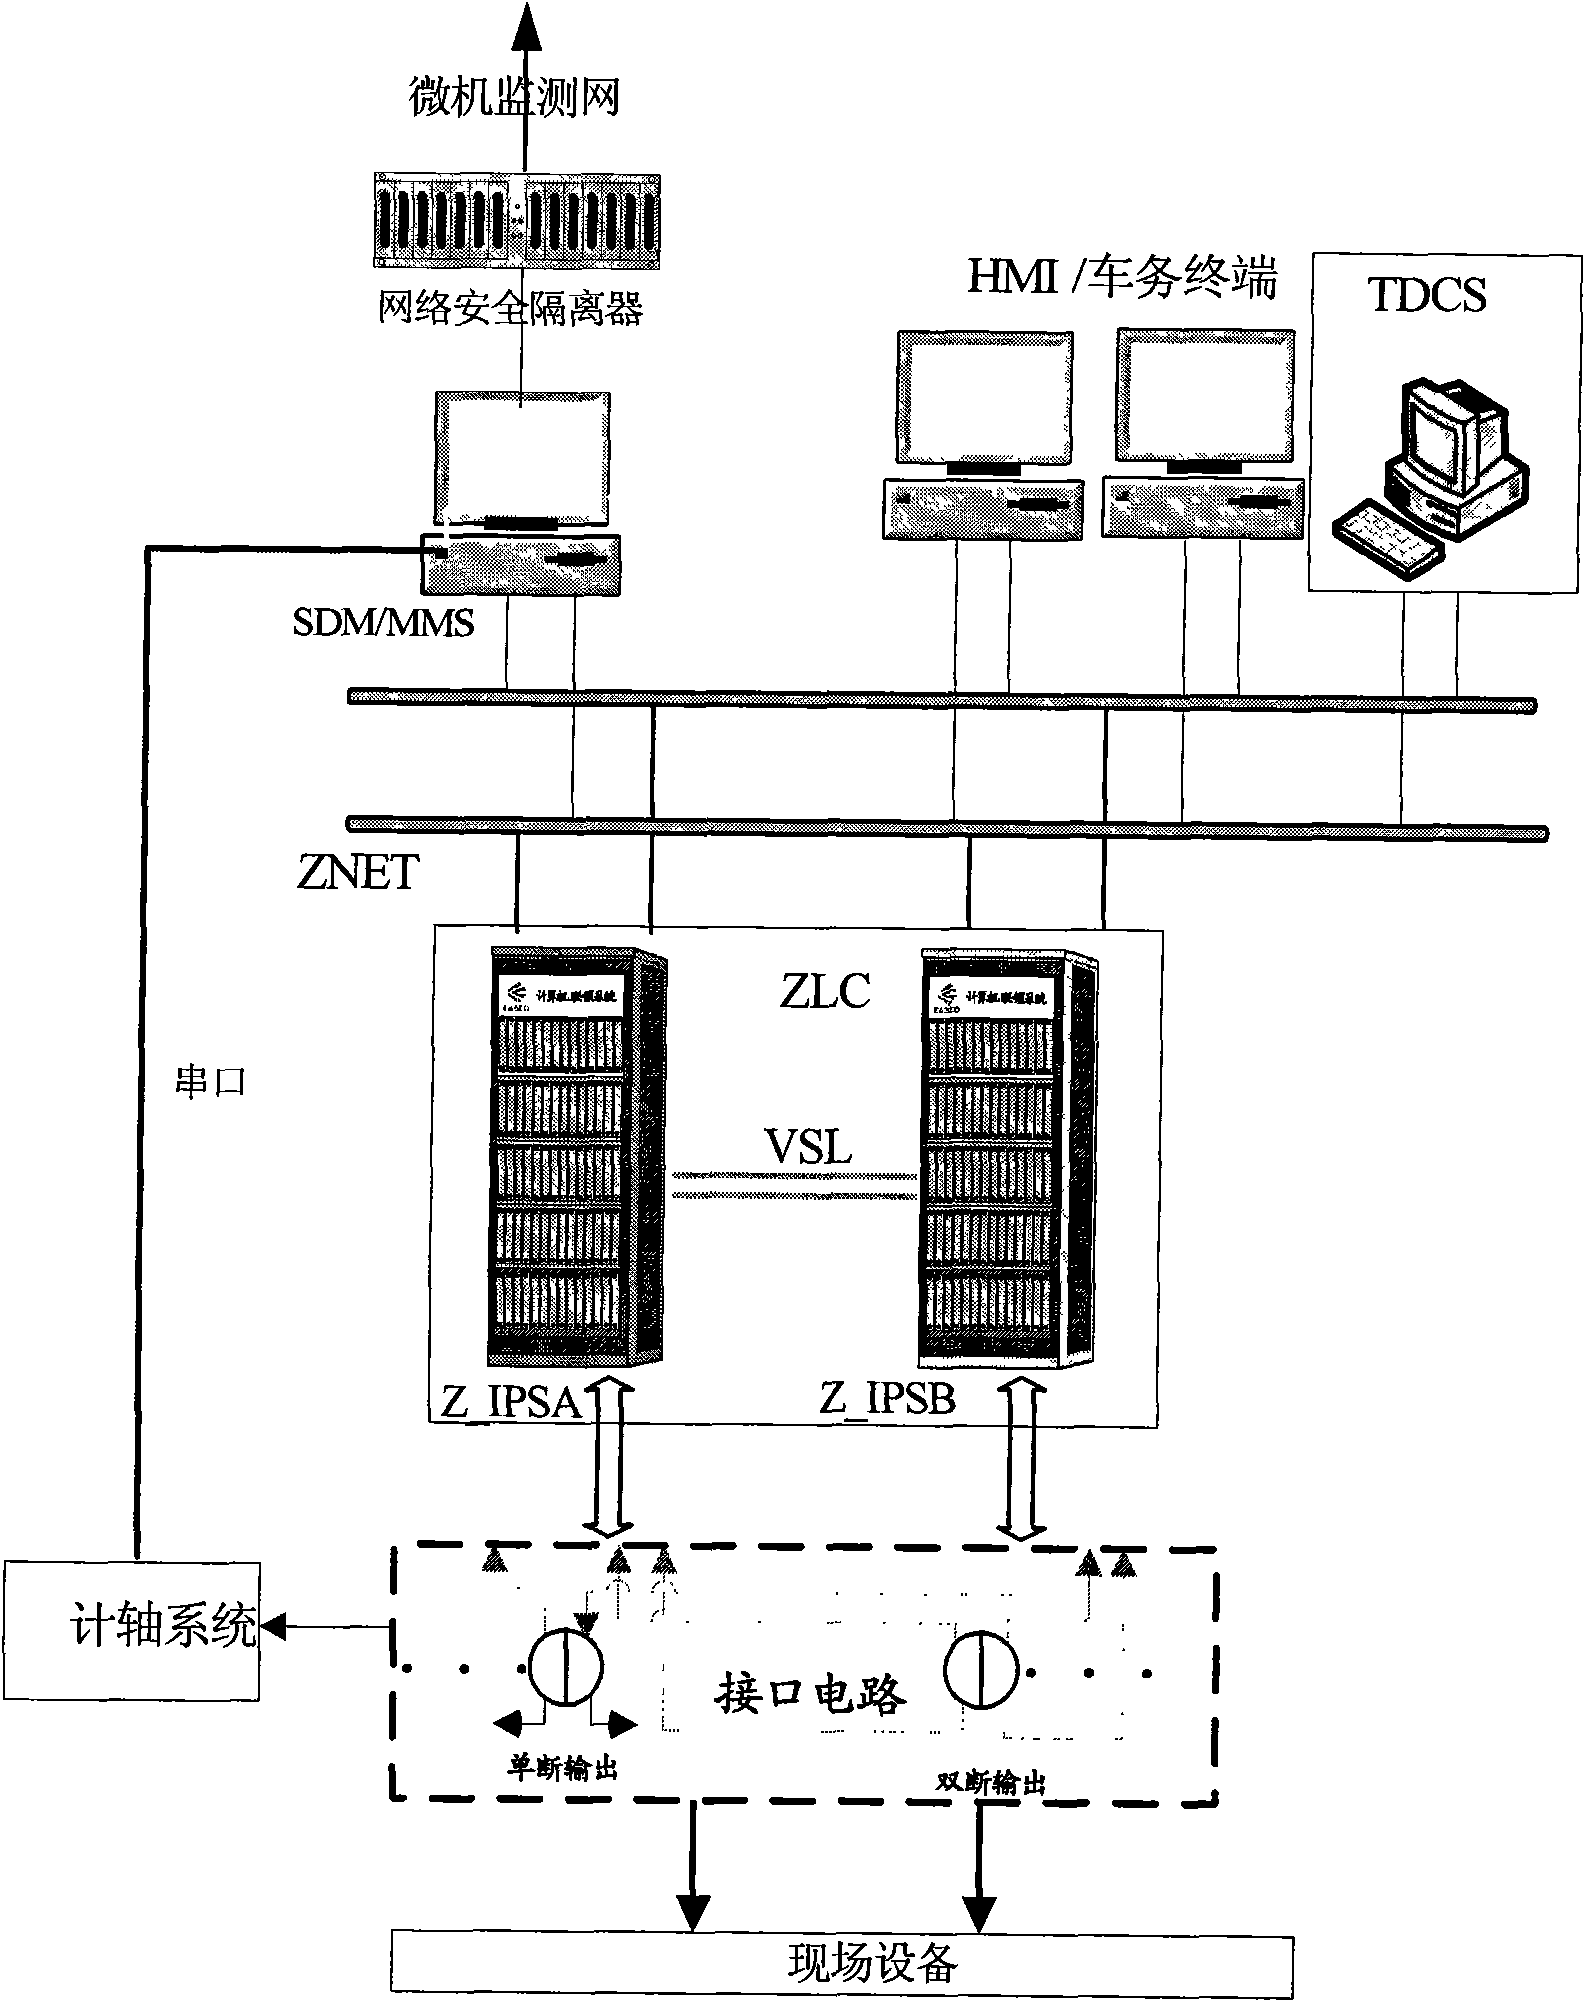 Regional computer interlocking control method with local control